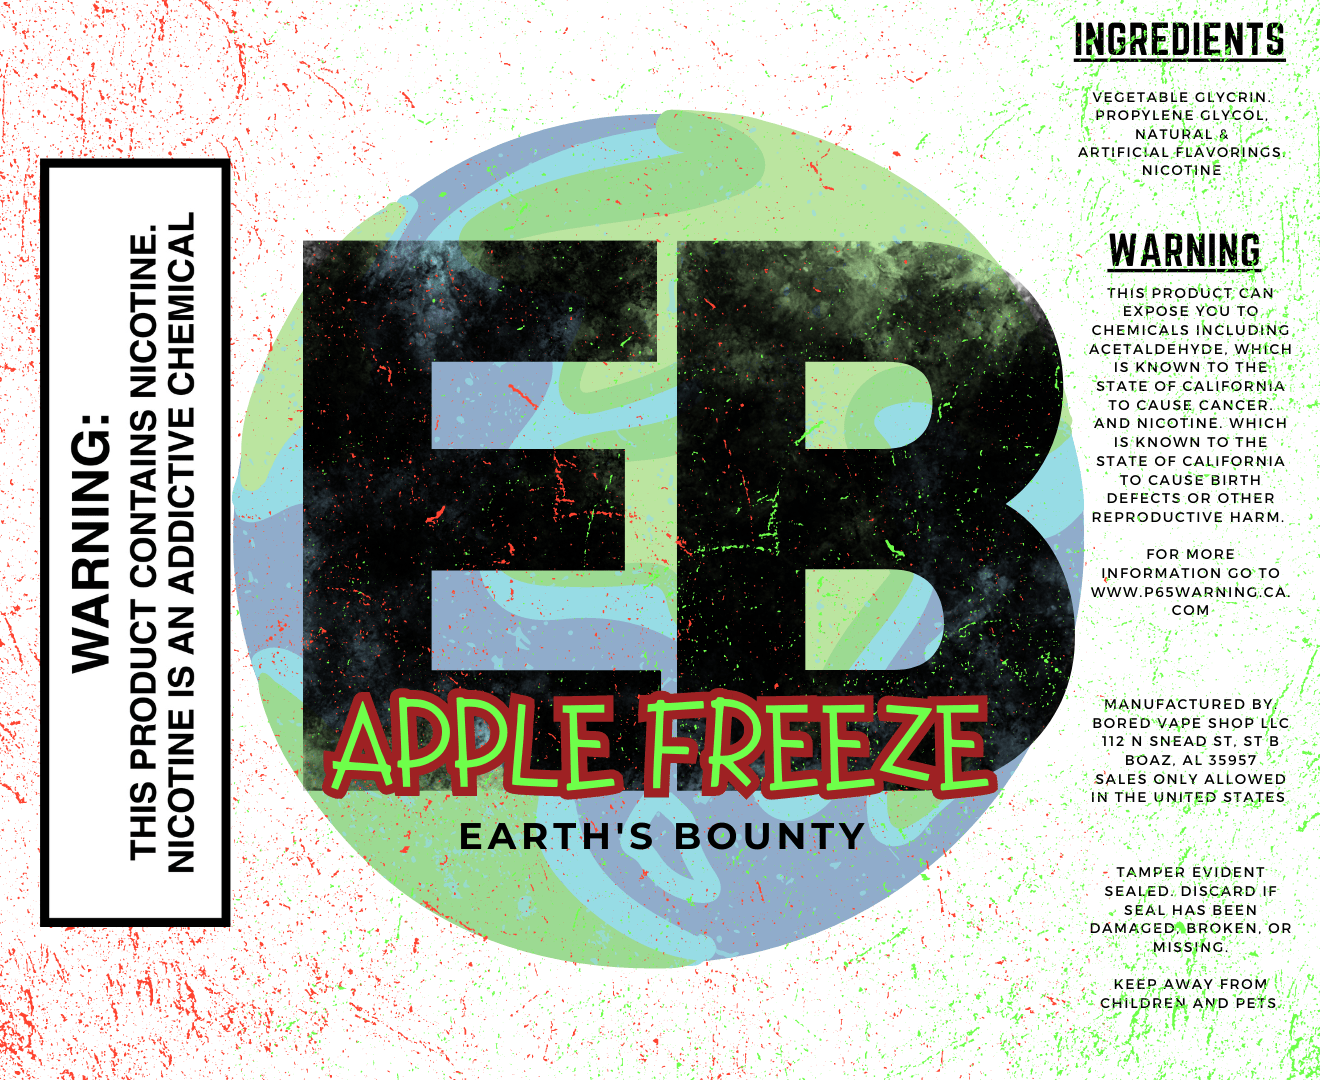 Apple Freeze - Earths Bounty E-Juice